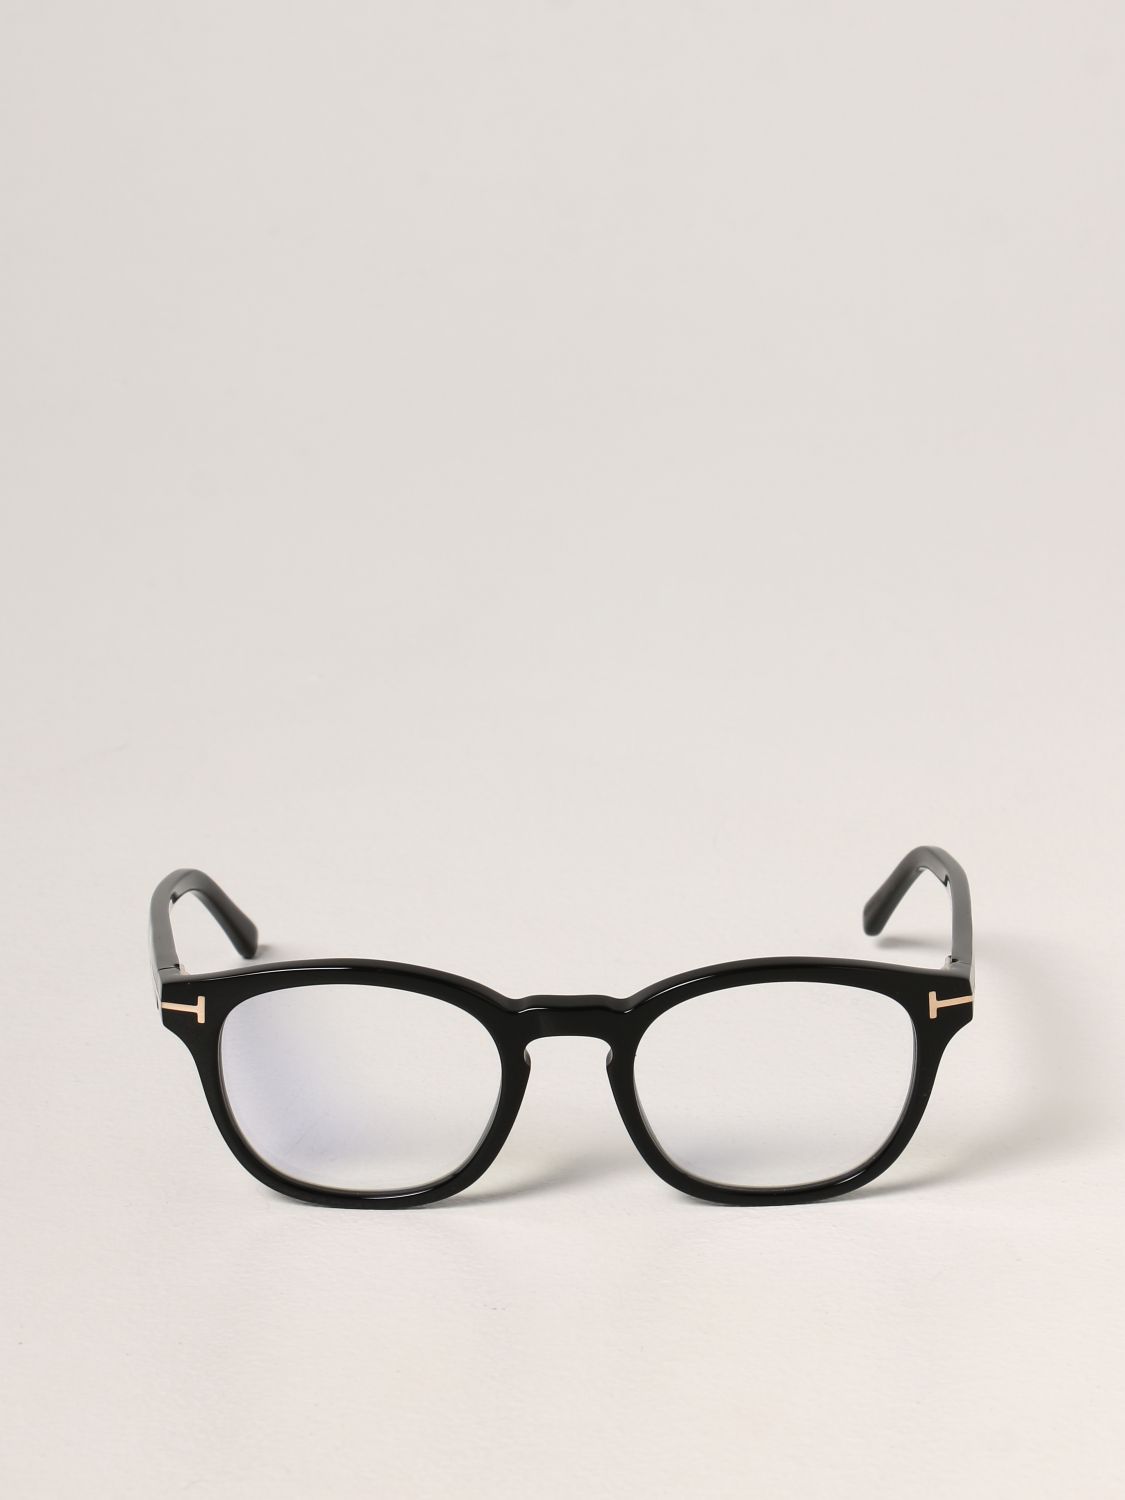 Gafas Tom Ford: Gafas hombre Tom Ford negro 4